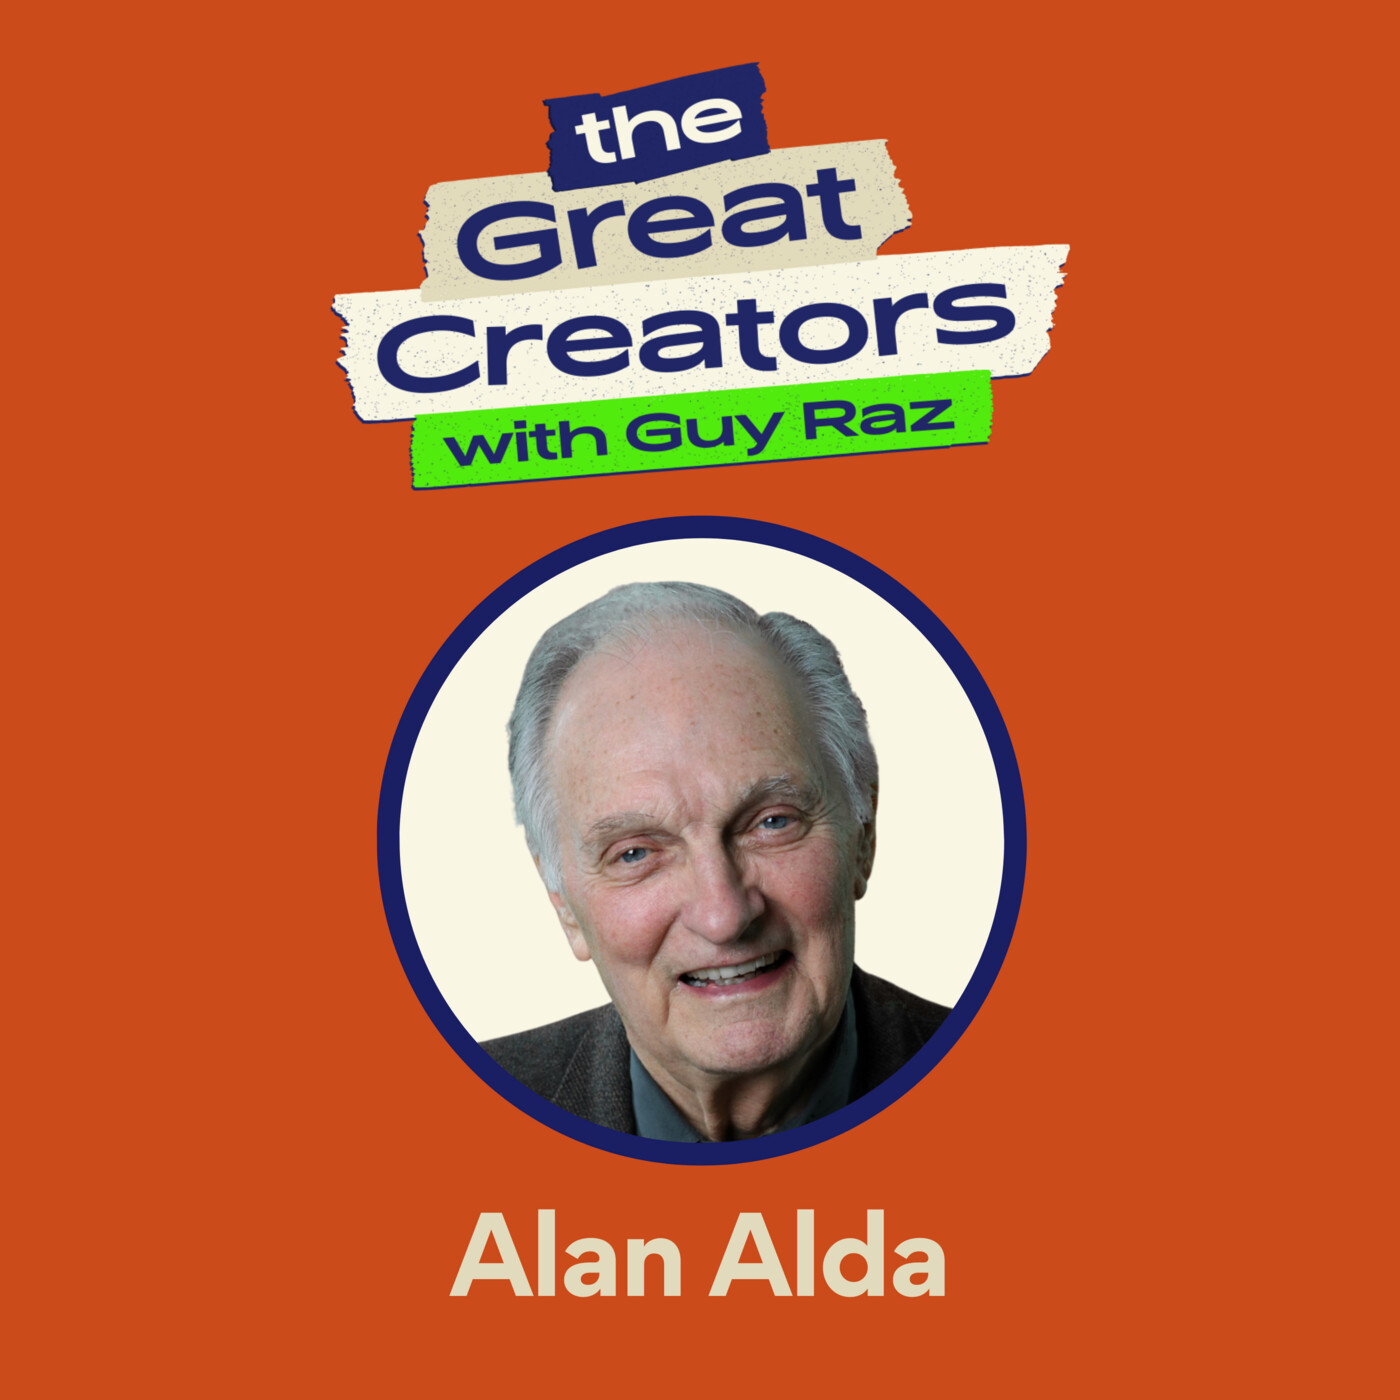 Alan Alda - Age, Parkinsons & Movies